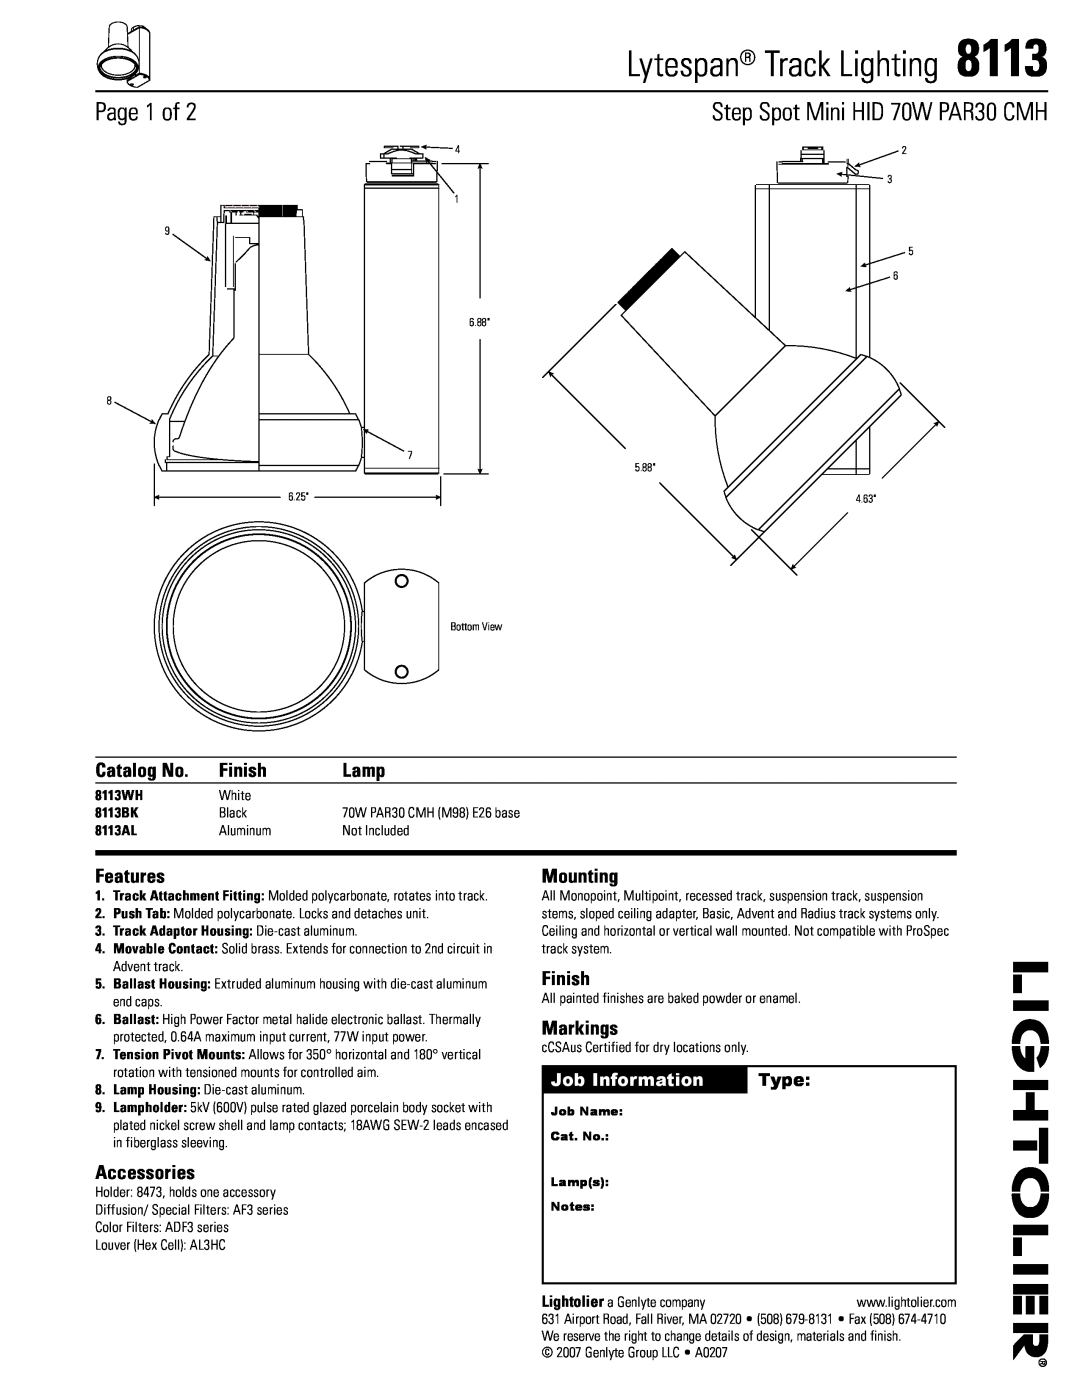 Lightolier 8113 manual Page of, Step Spot Mini HID 70W PAR30 CMH, Catalog No, Finish, Lamp, Features, Accessories, Type 